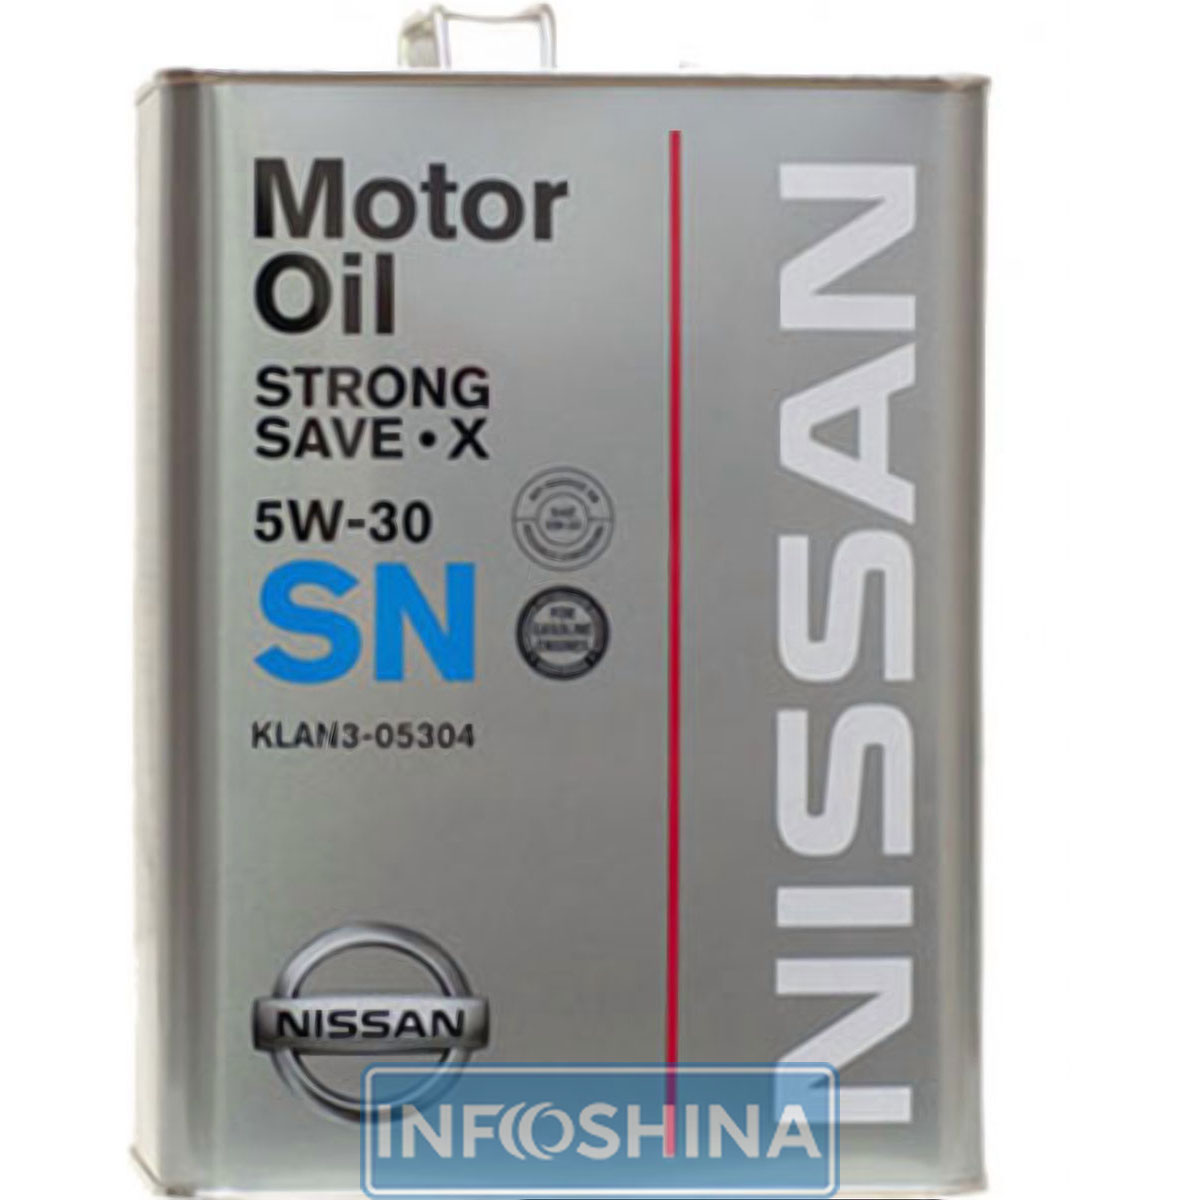 Купити масло Nissan SN Strong Save X 5W-30 (4л)